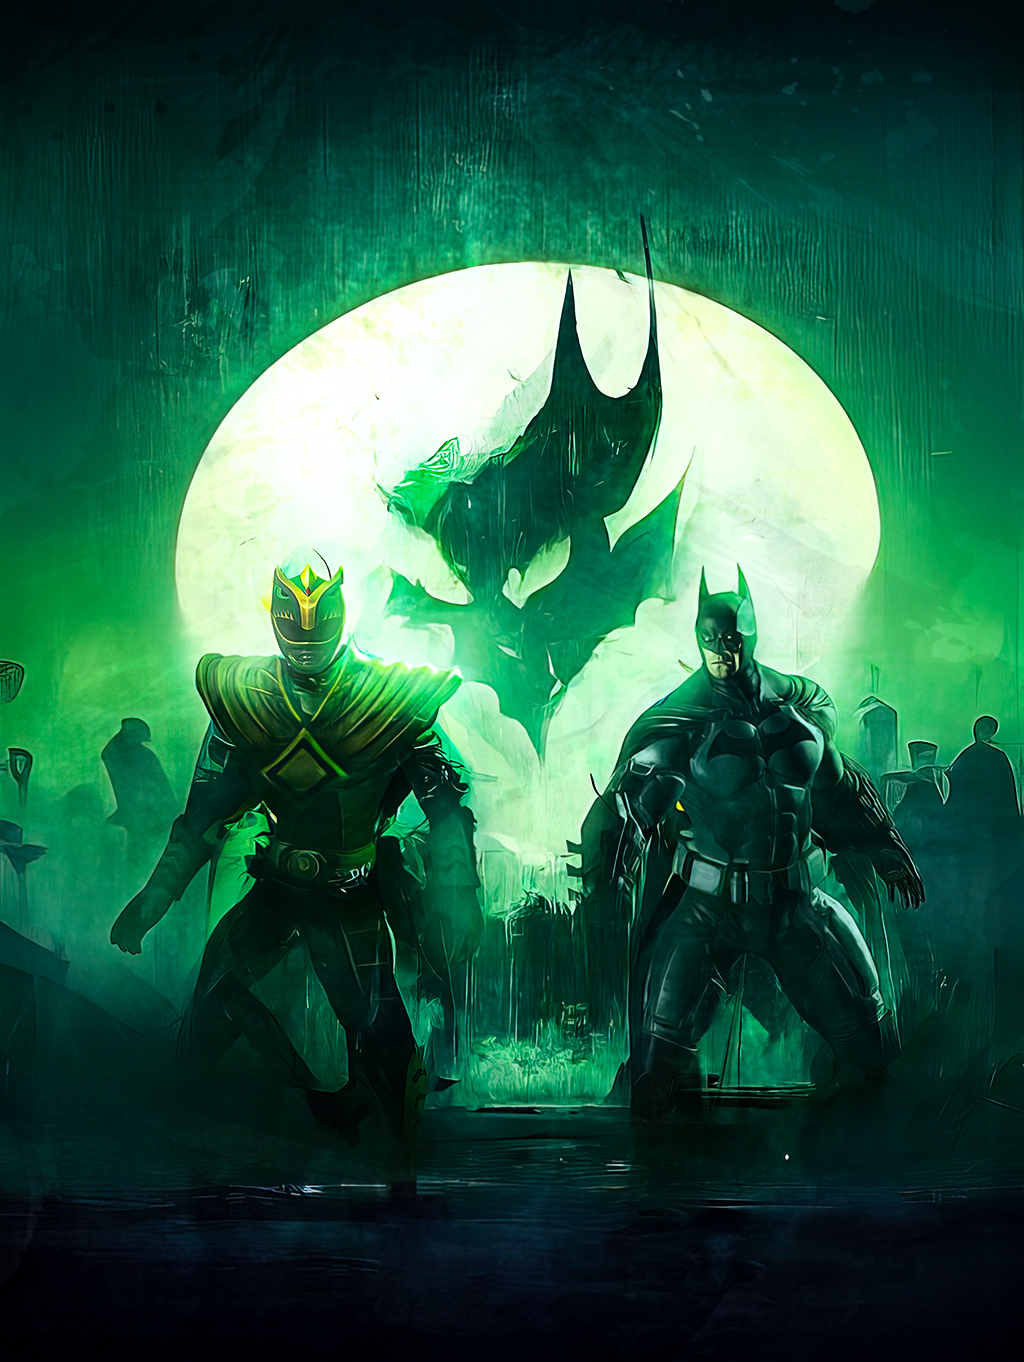 Green Ranger joins Batman to Fight Demons by Rahhmi on DeviantArt